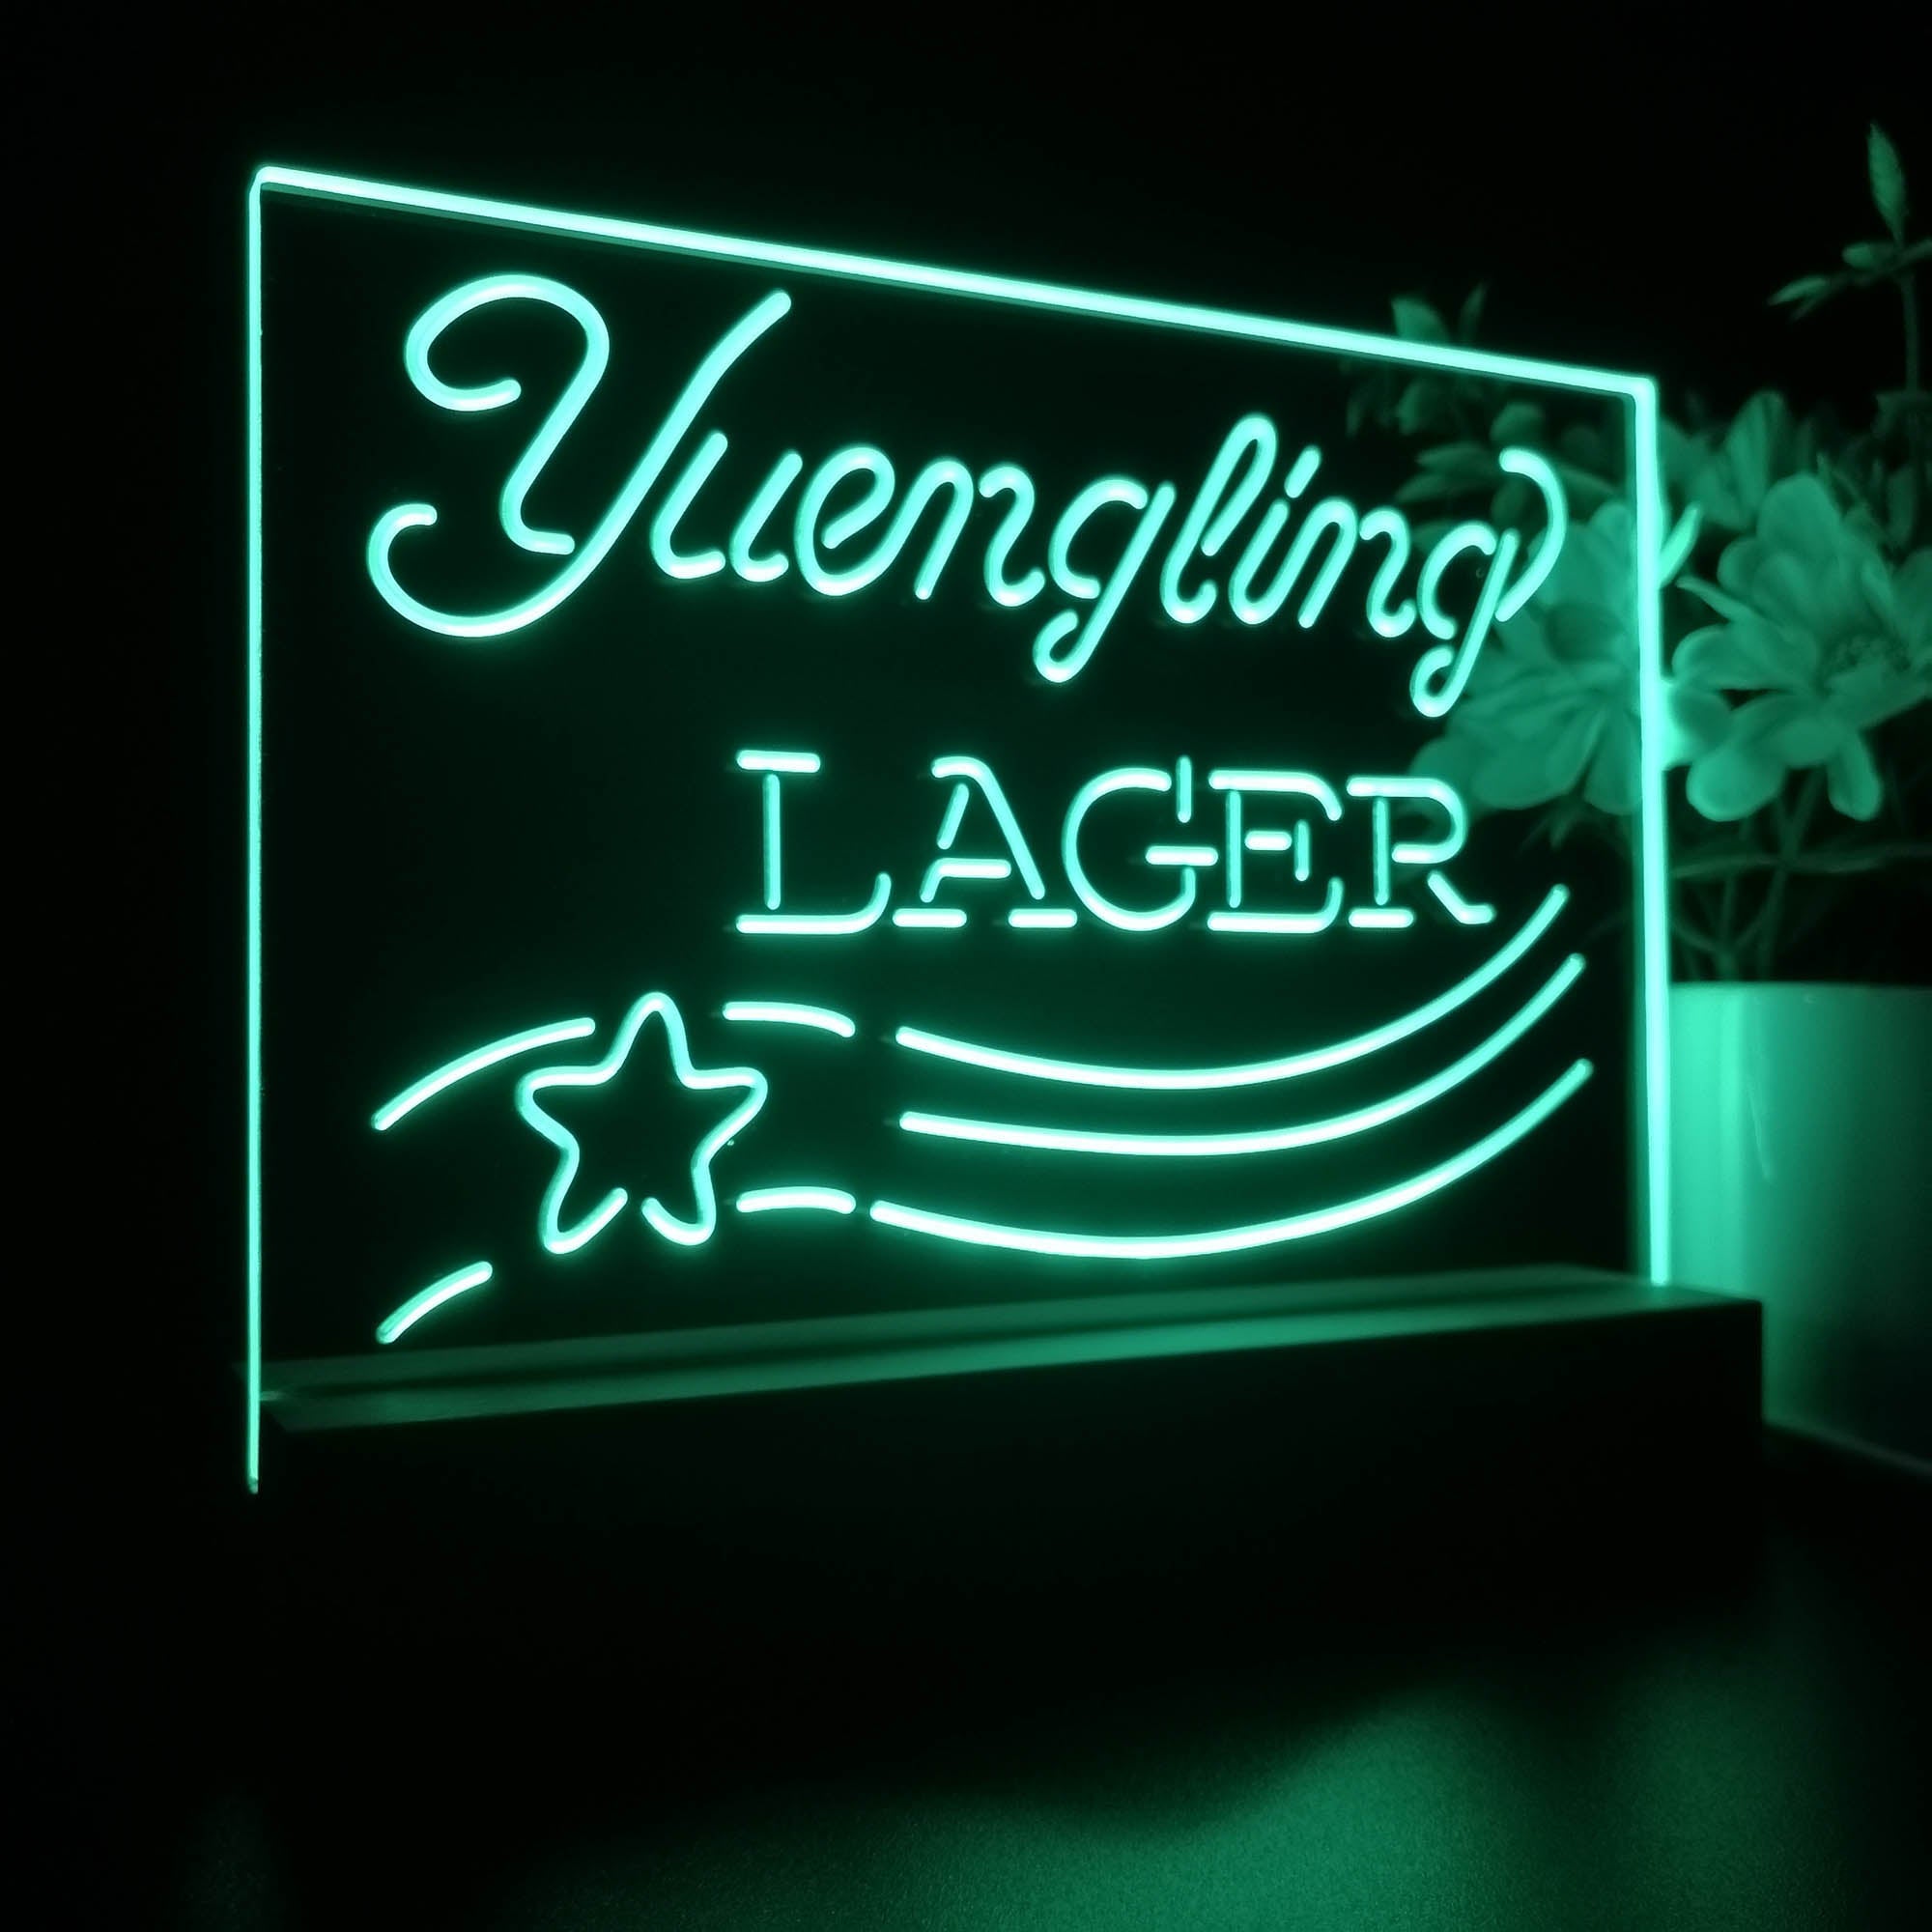 Yuengling Beer Larger Bar Night Light LED Sign